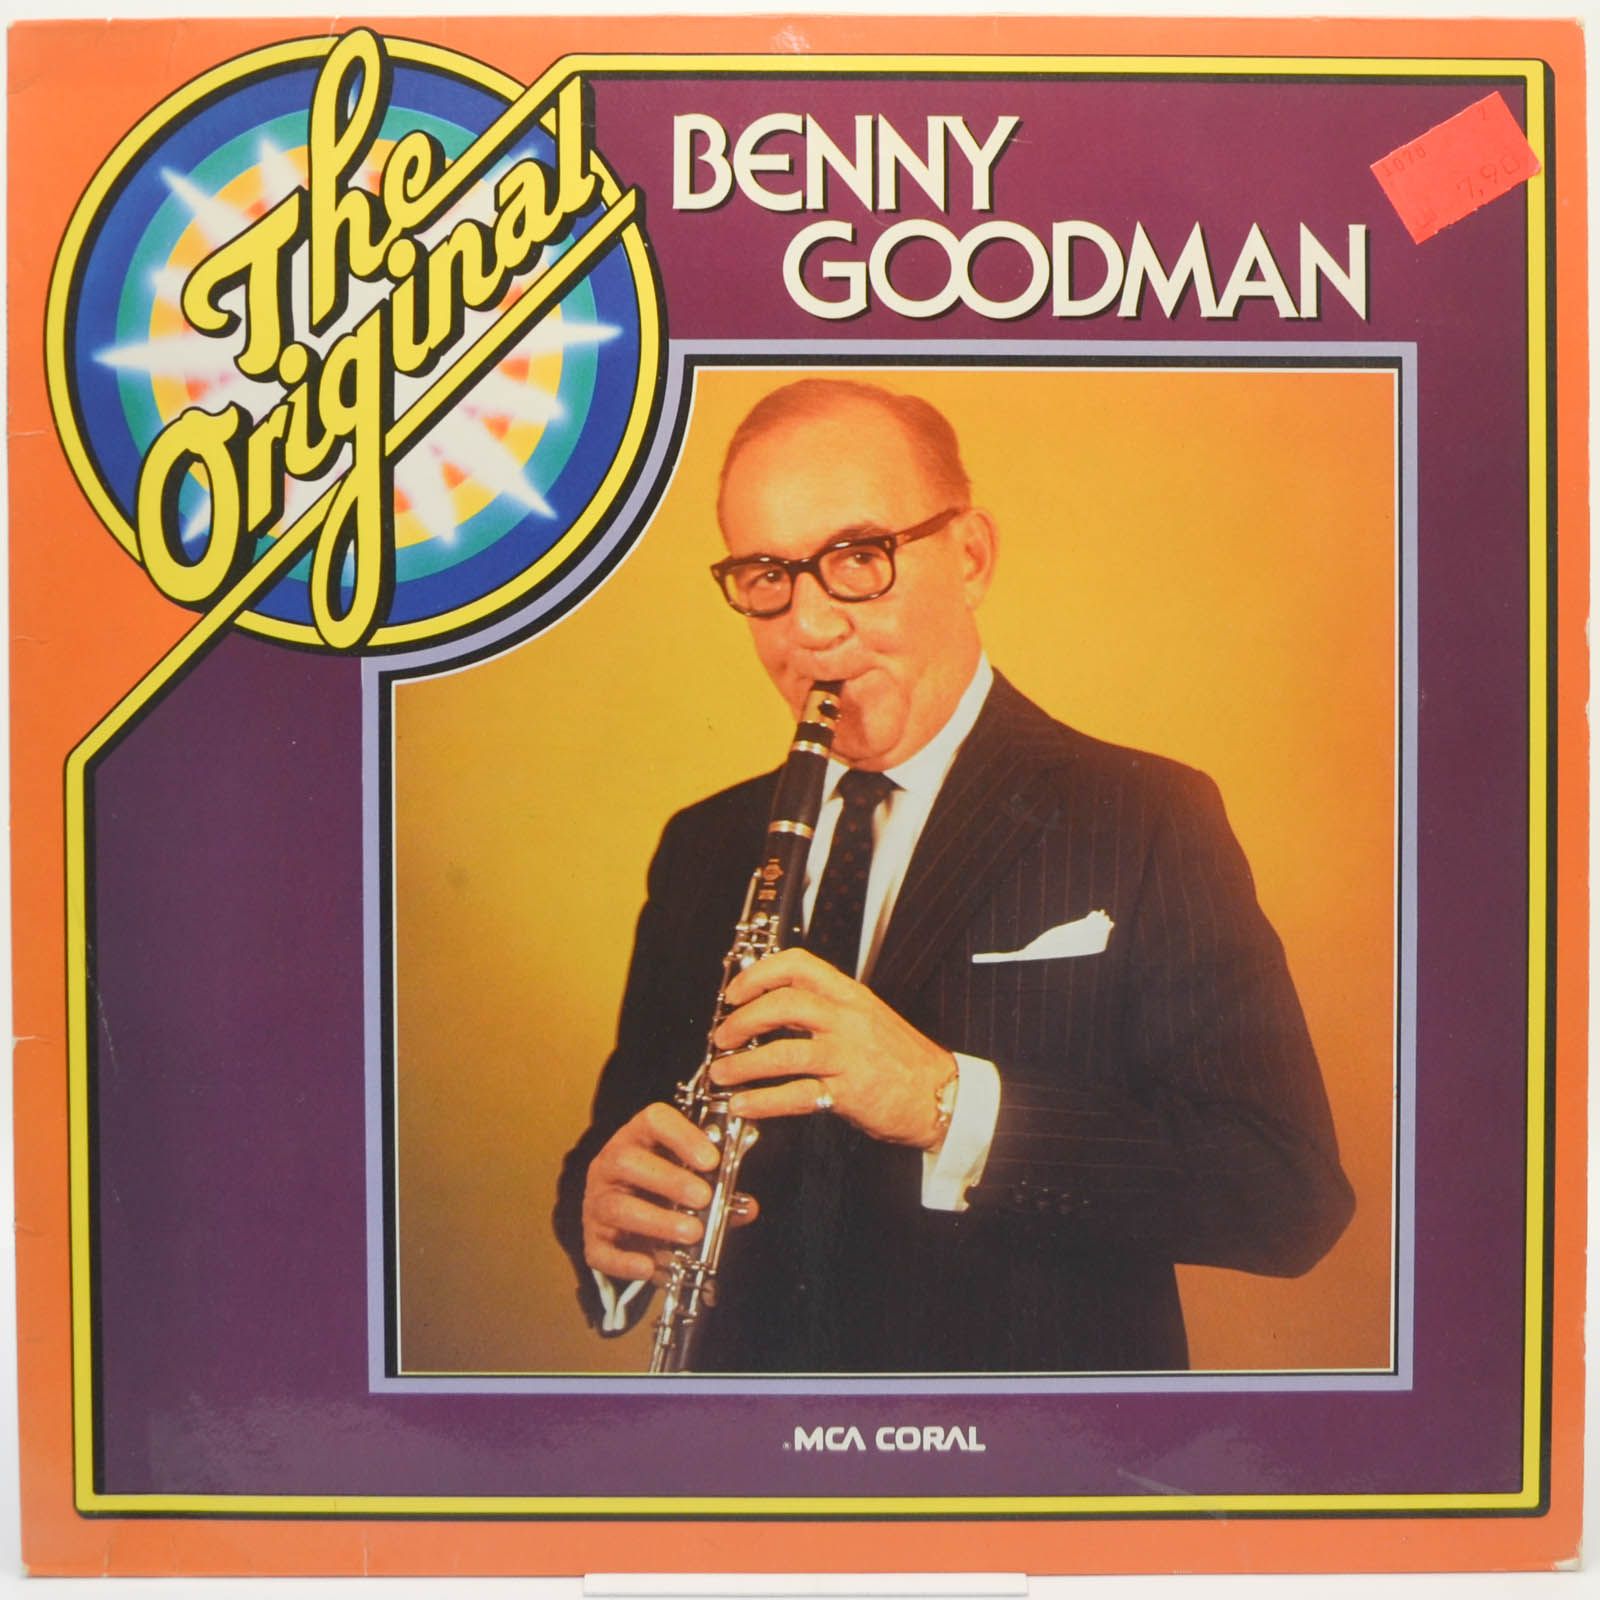 Benny Goodman — The Original Benny Goodman, 1977